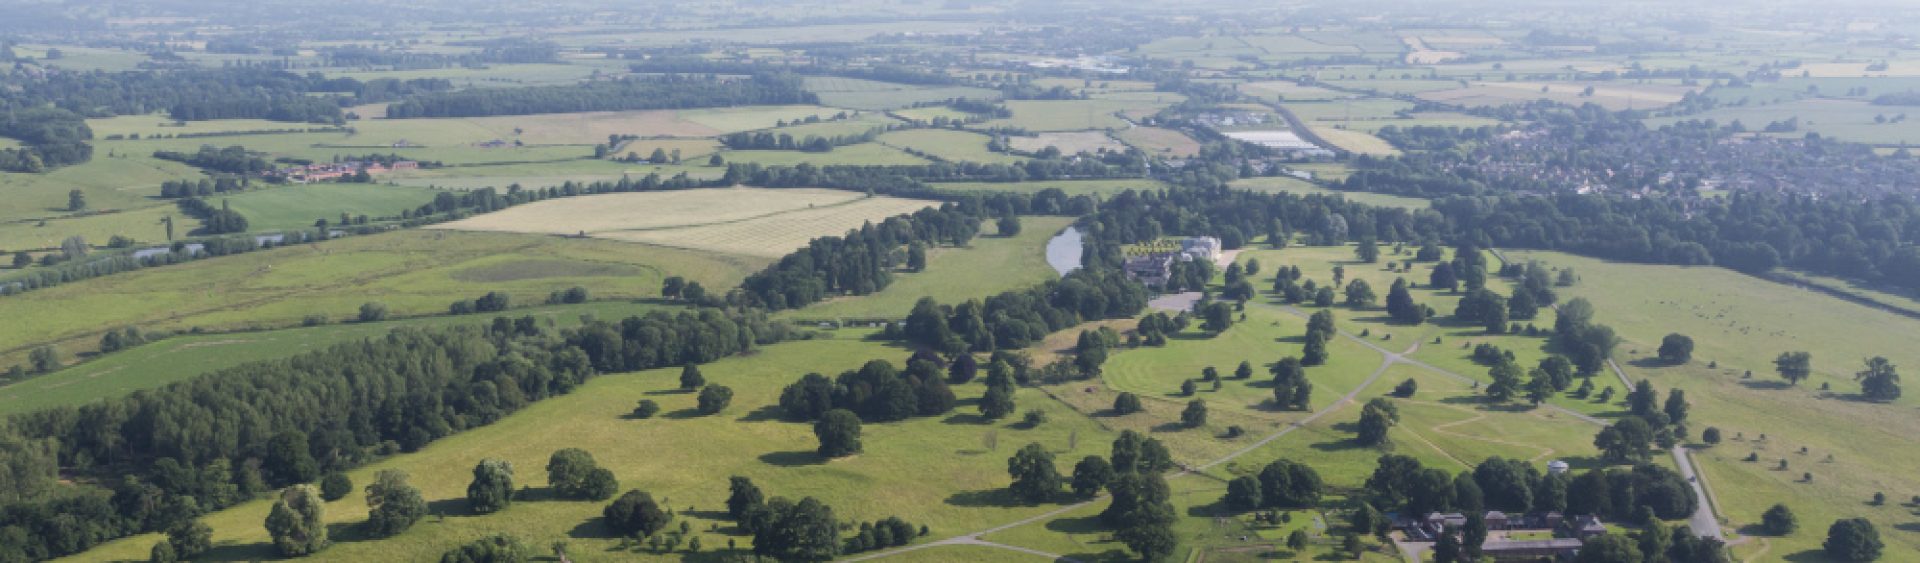 Aerial view of Shugborough Estate, Staffordshire